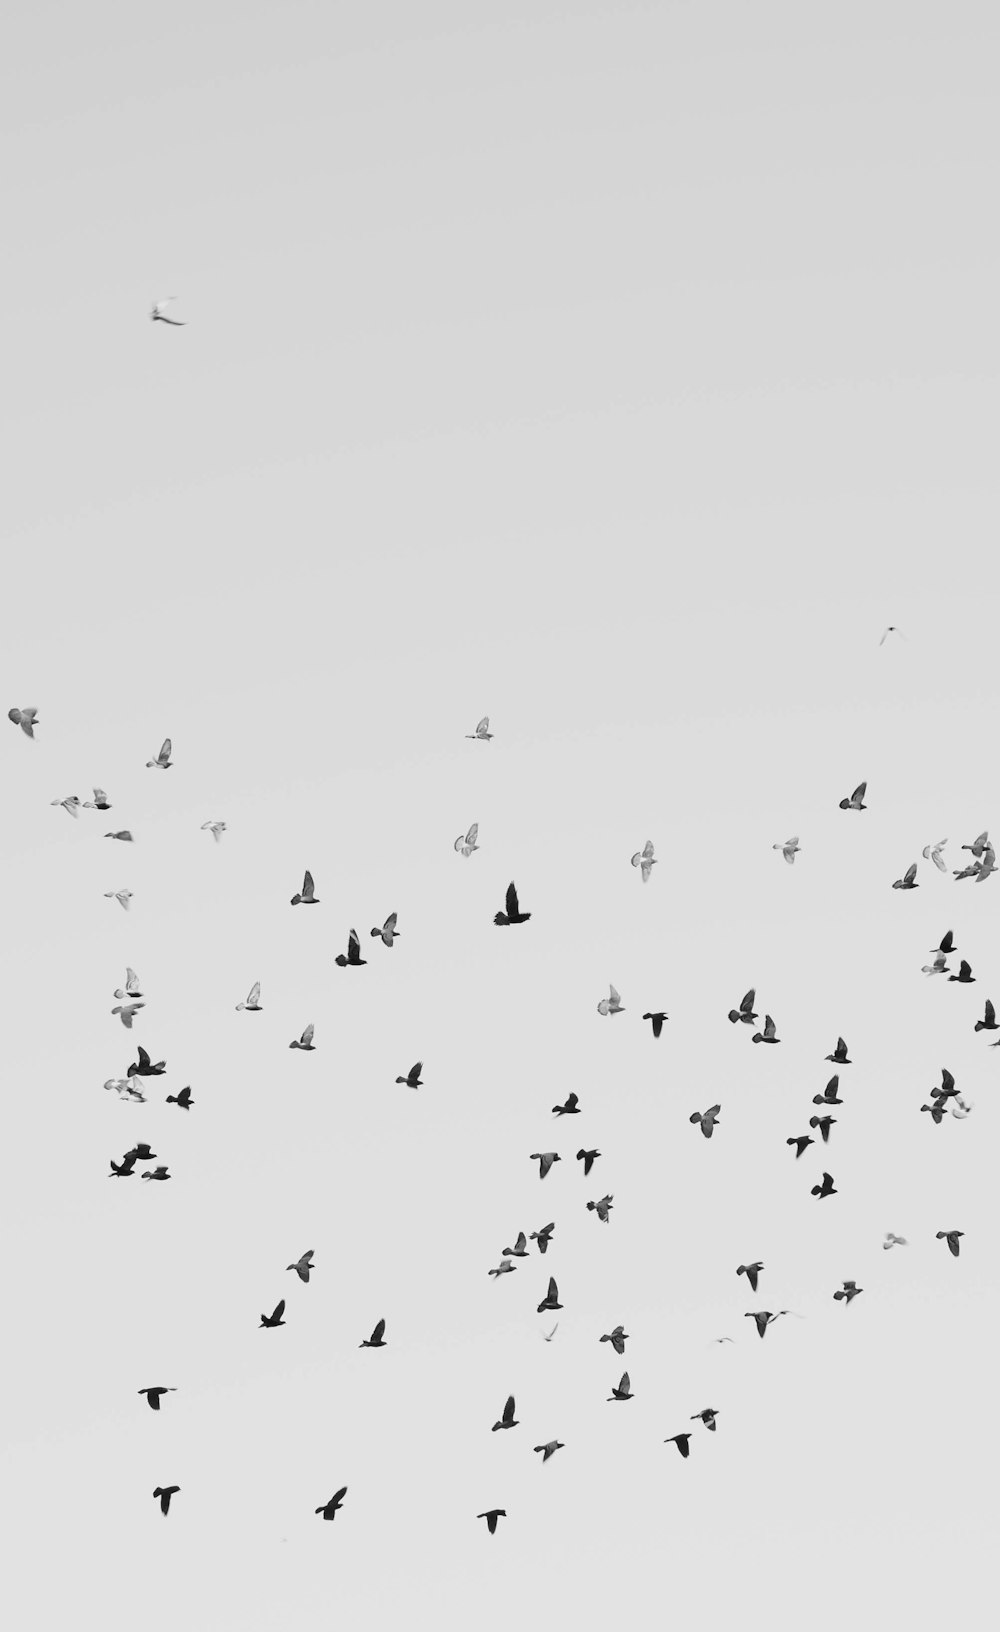 flock of birds flying on sky during daytime